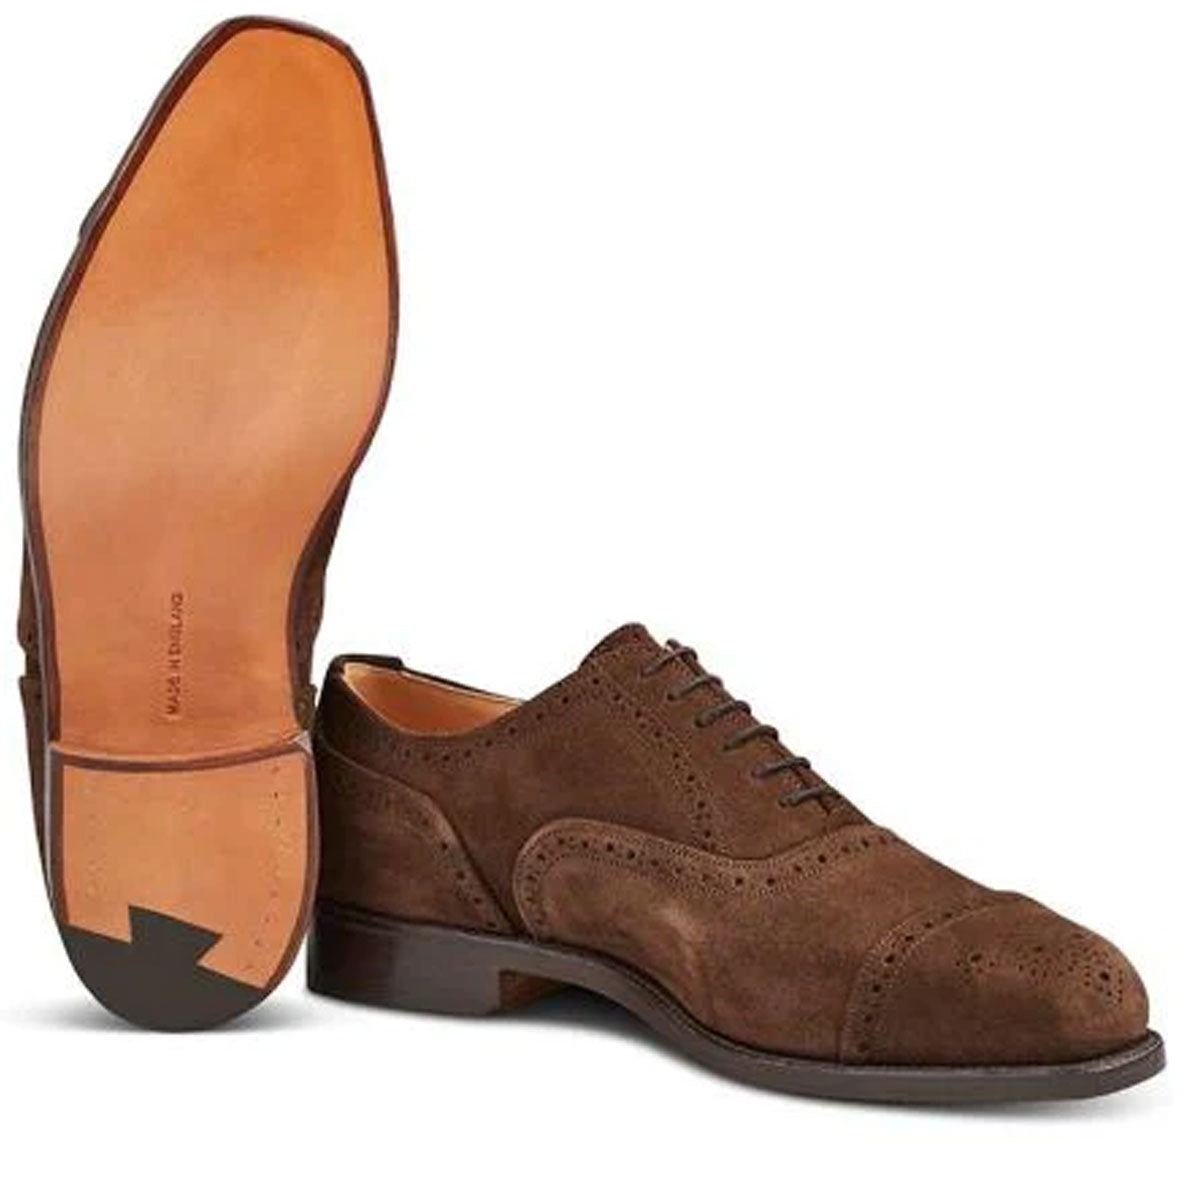 TRICKER'S Kensington Shoes - Mens - Chocolate Repello Suede